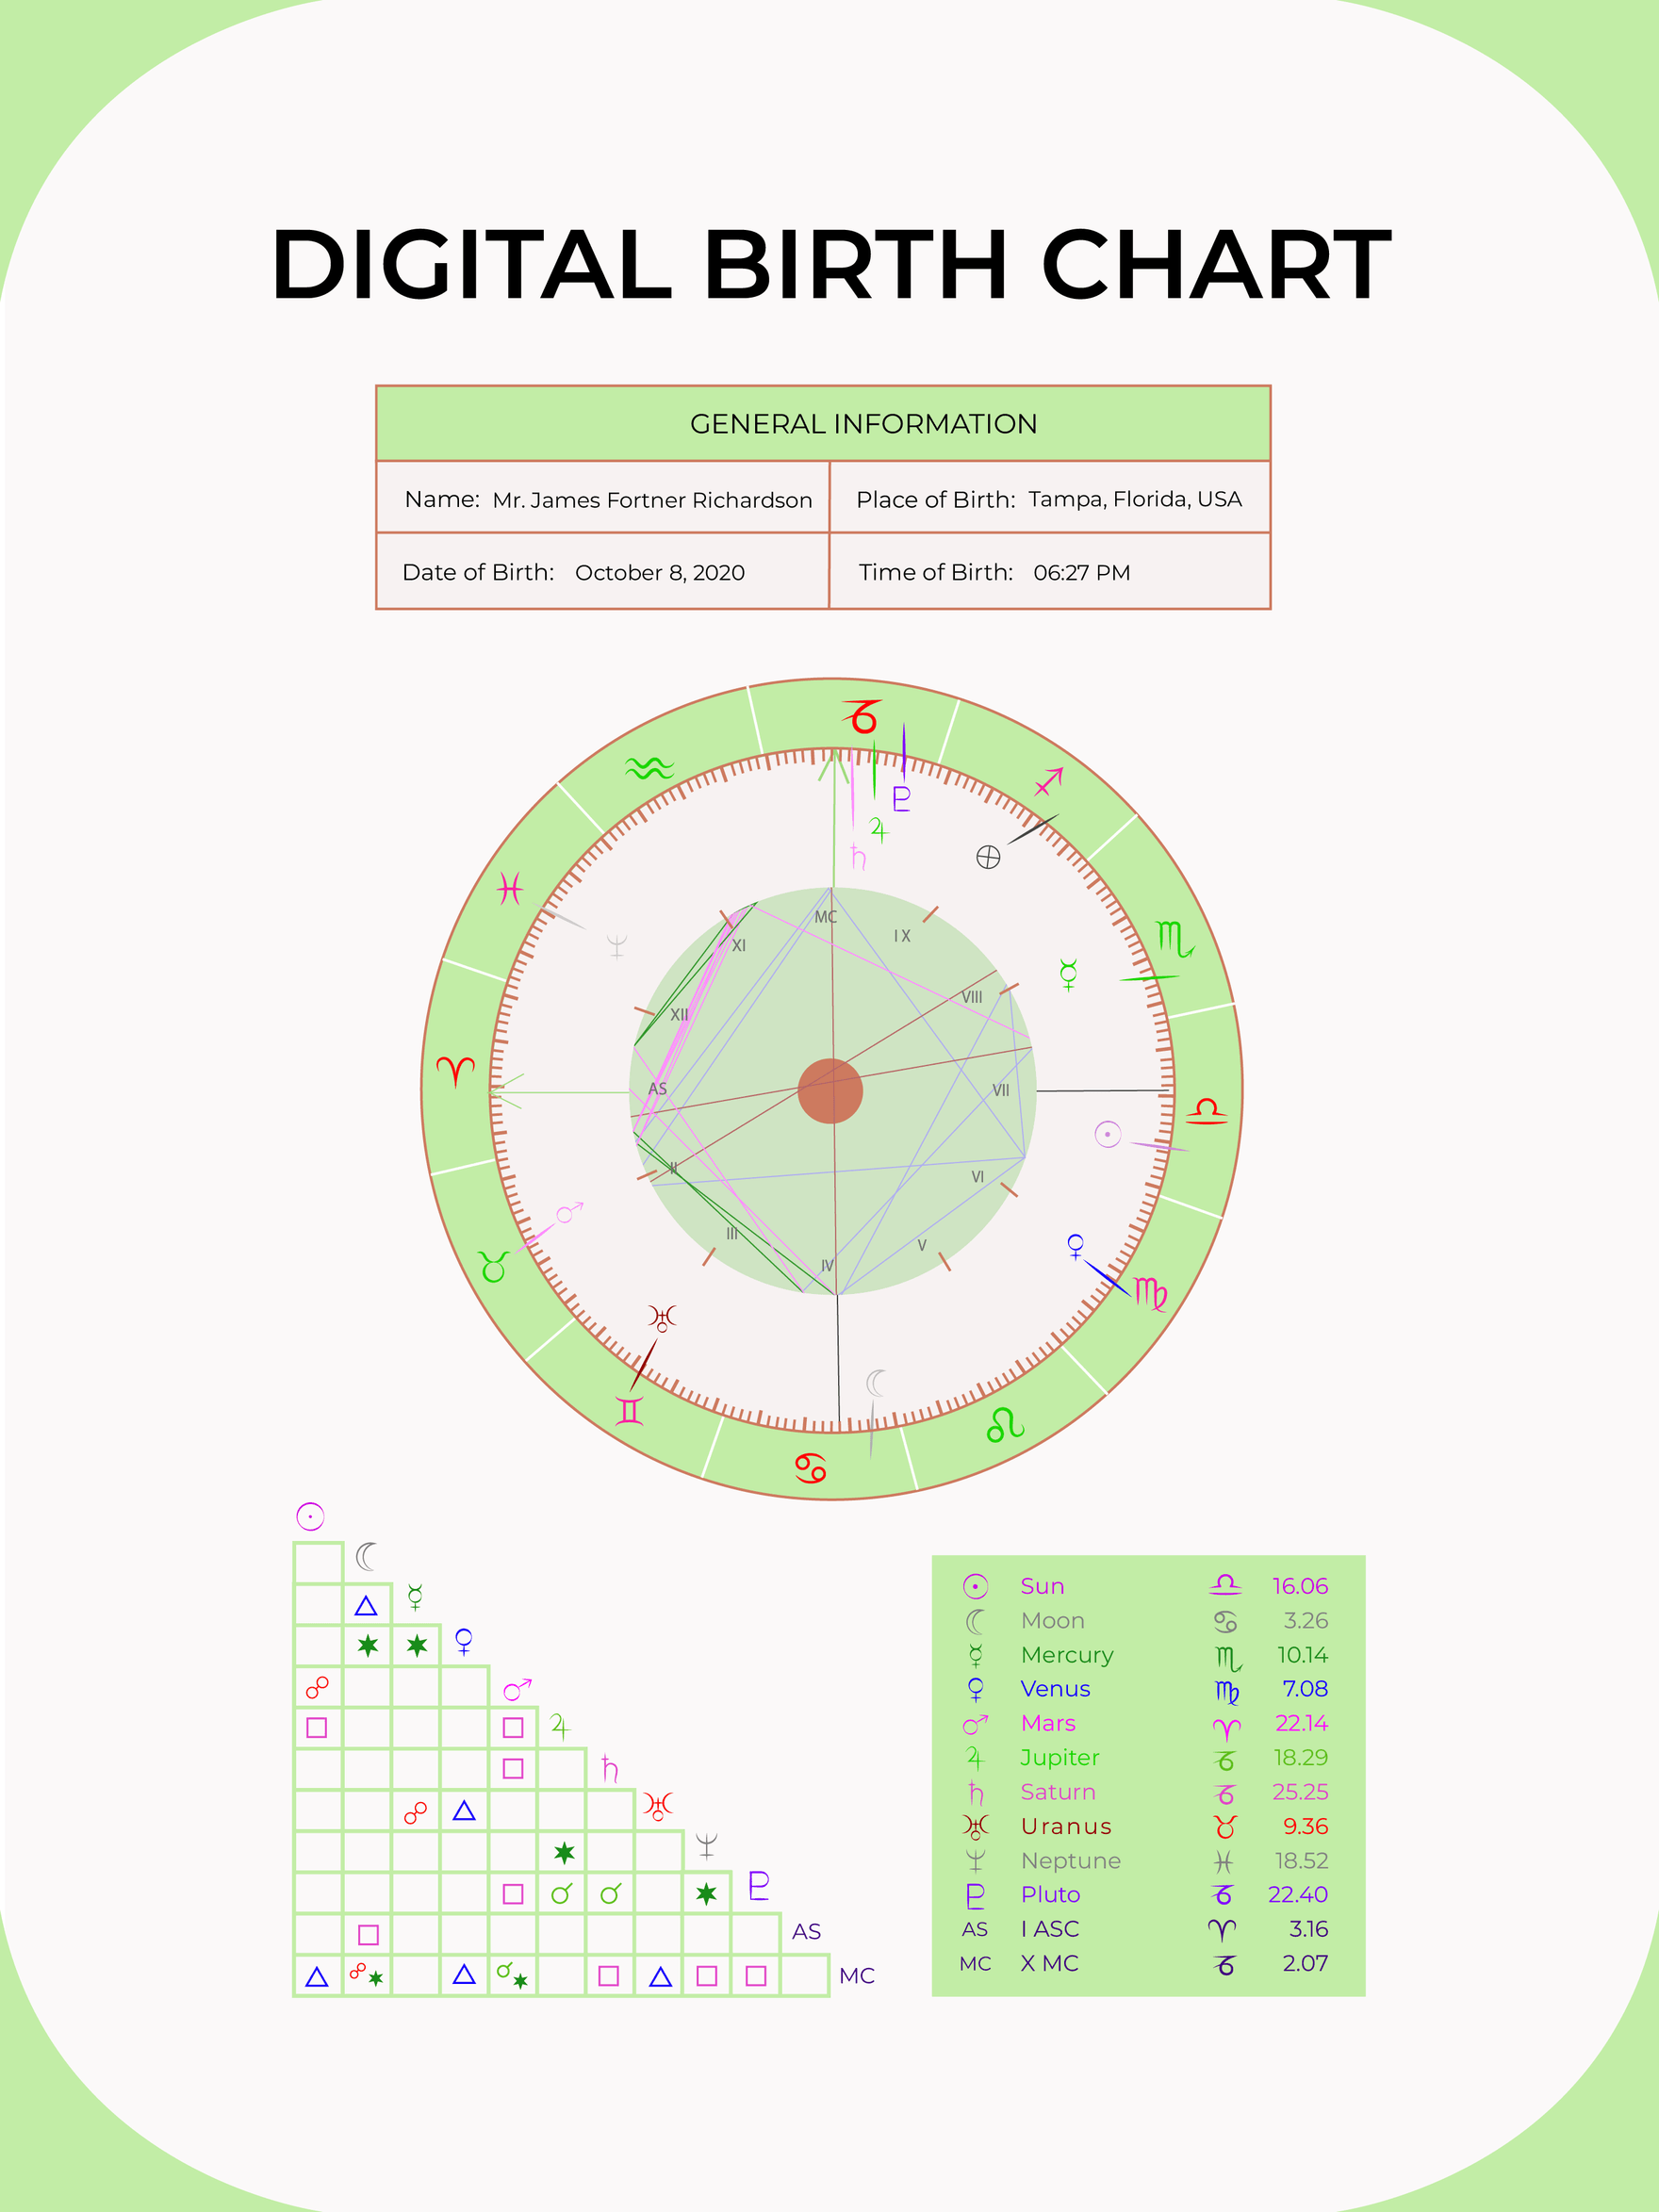 Digital Birth Chart in PDF, Illustrator